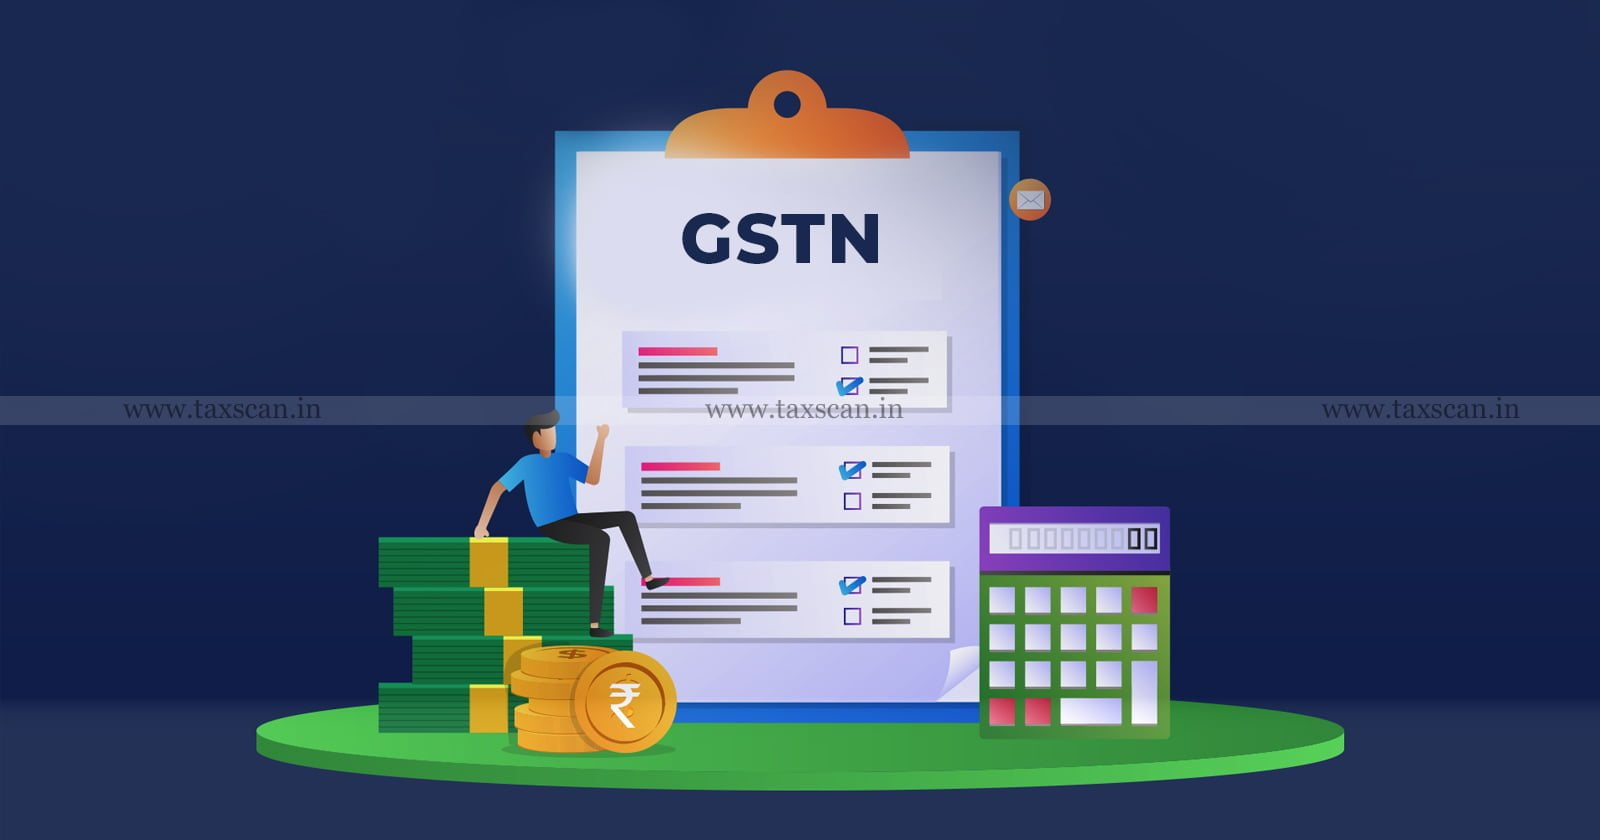 GSTN - GST - Principal Place of Business - GST Portal - taxscan